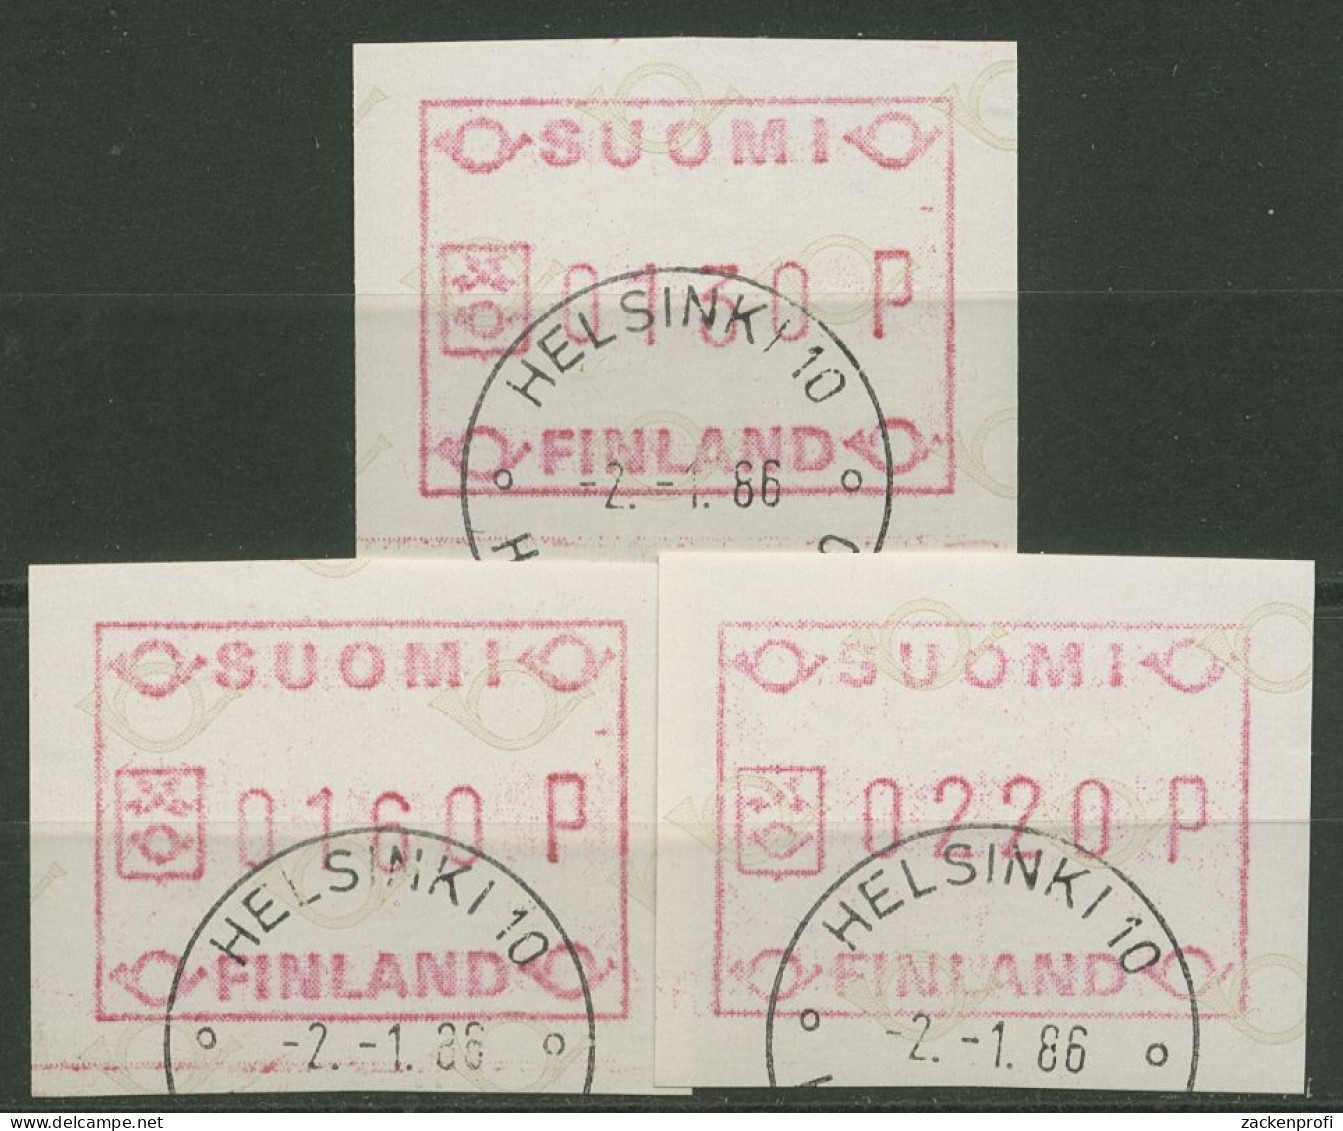 Finnland Automatenmarken 1986 Kleine Posthörner Satz ATM 1.1 S 6 Gestempelt - Timbres De Distributeurs [ATM]